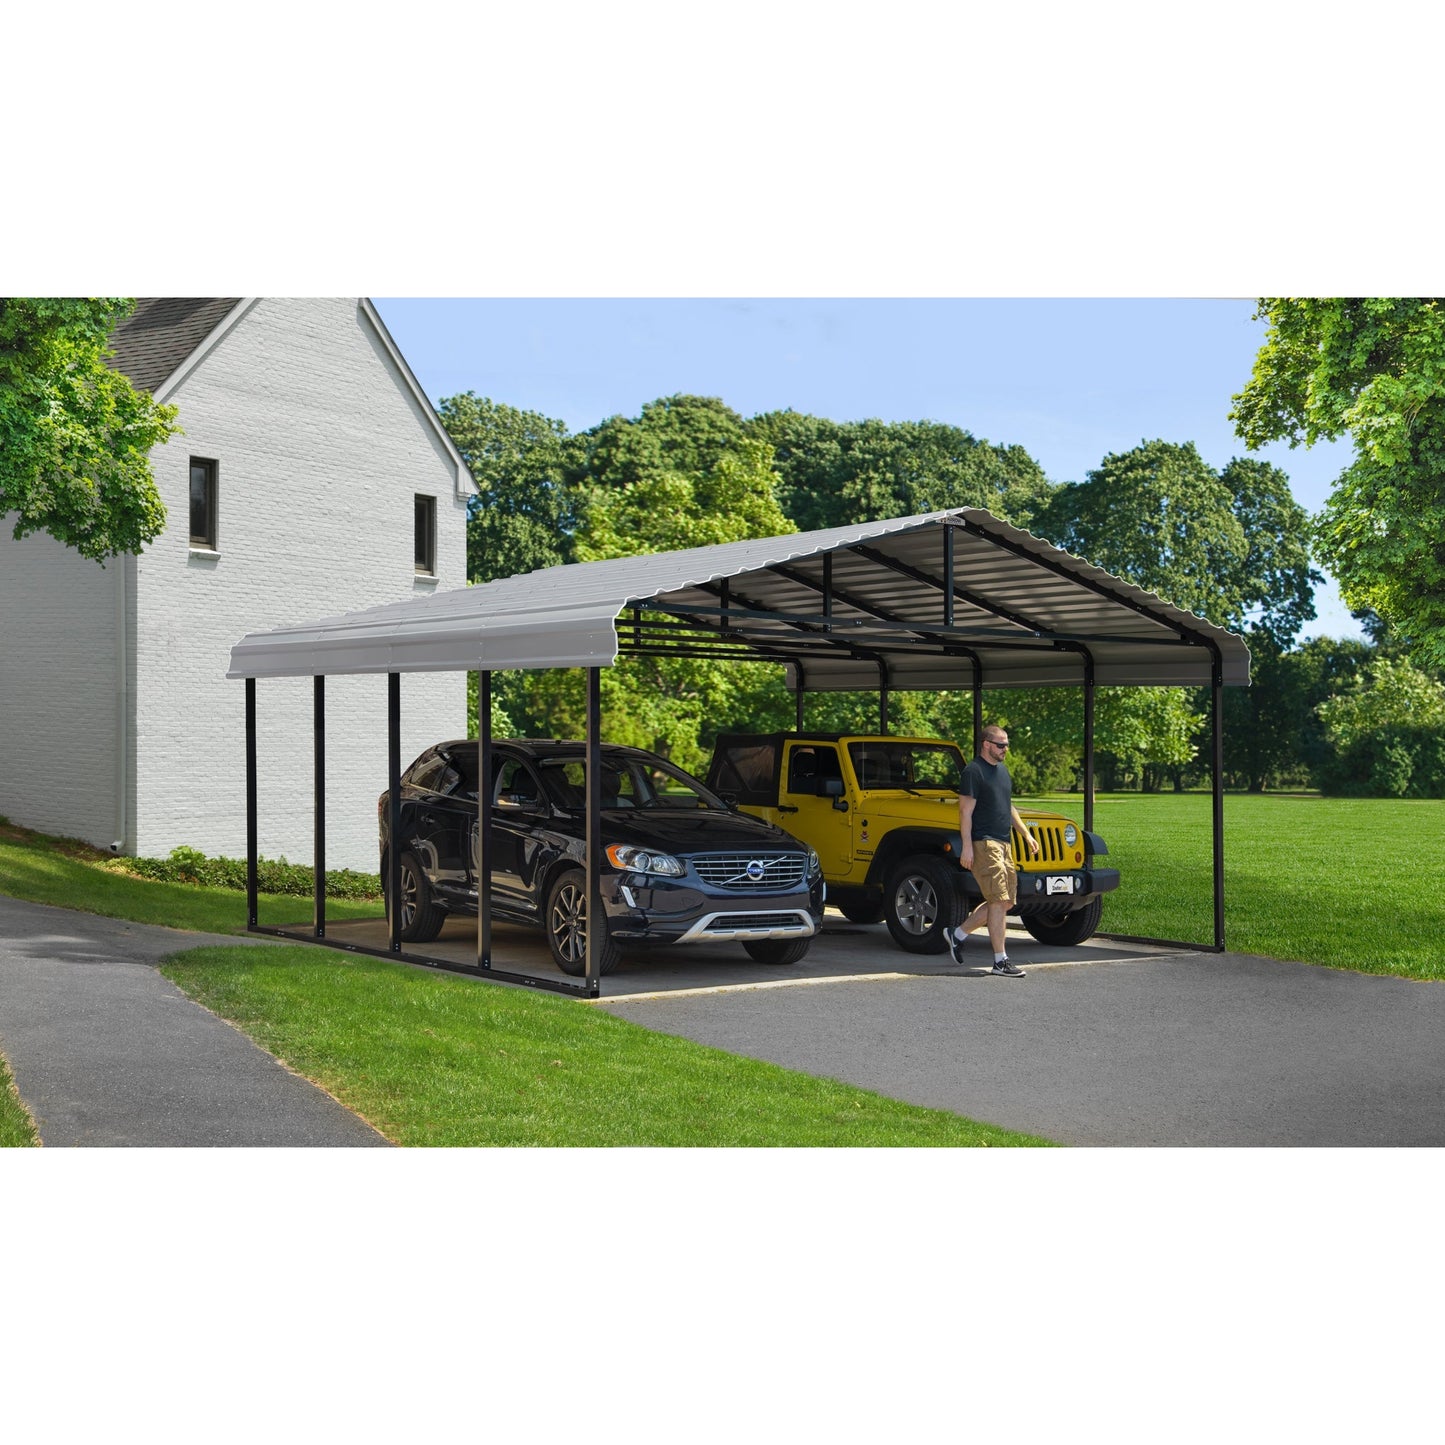 Arrow Steel Carport Canopy 20 x 20 x 9 ft.-Delightful Yard